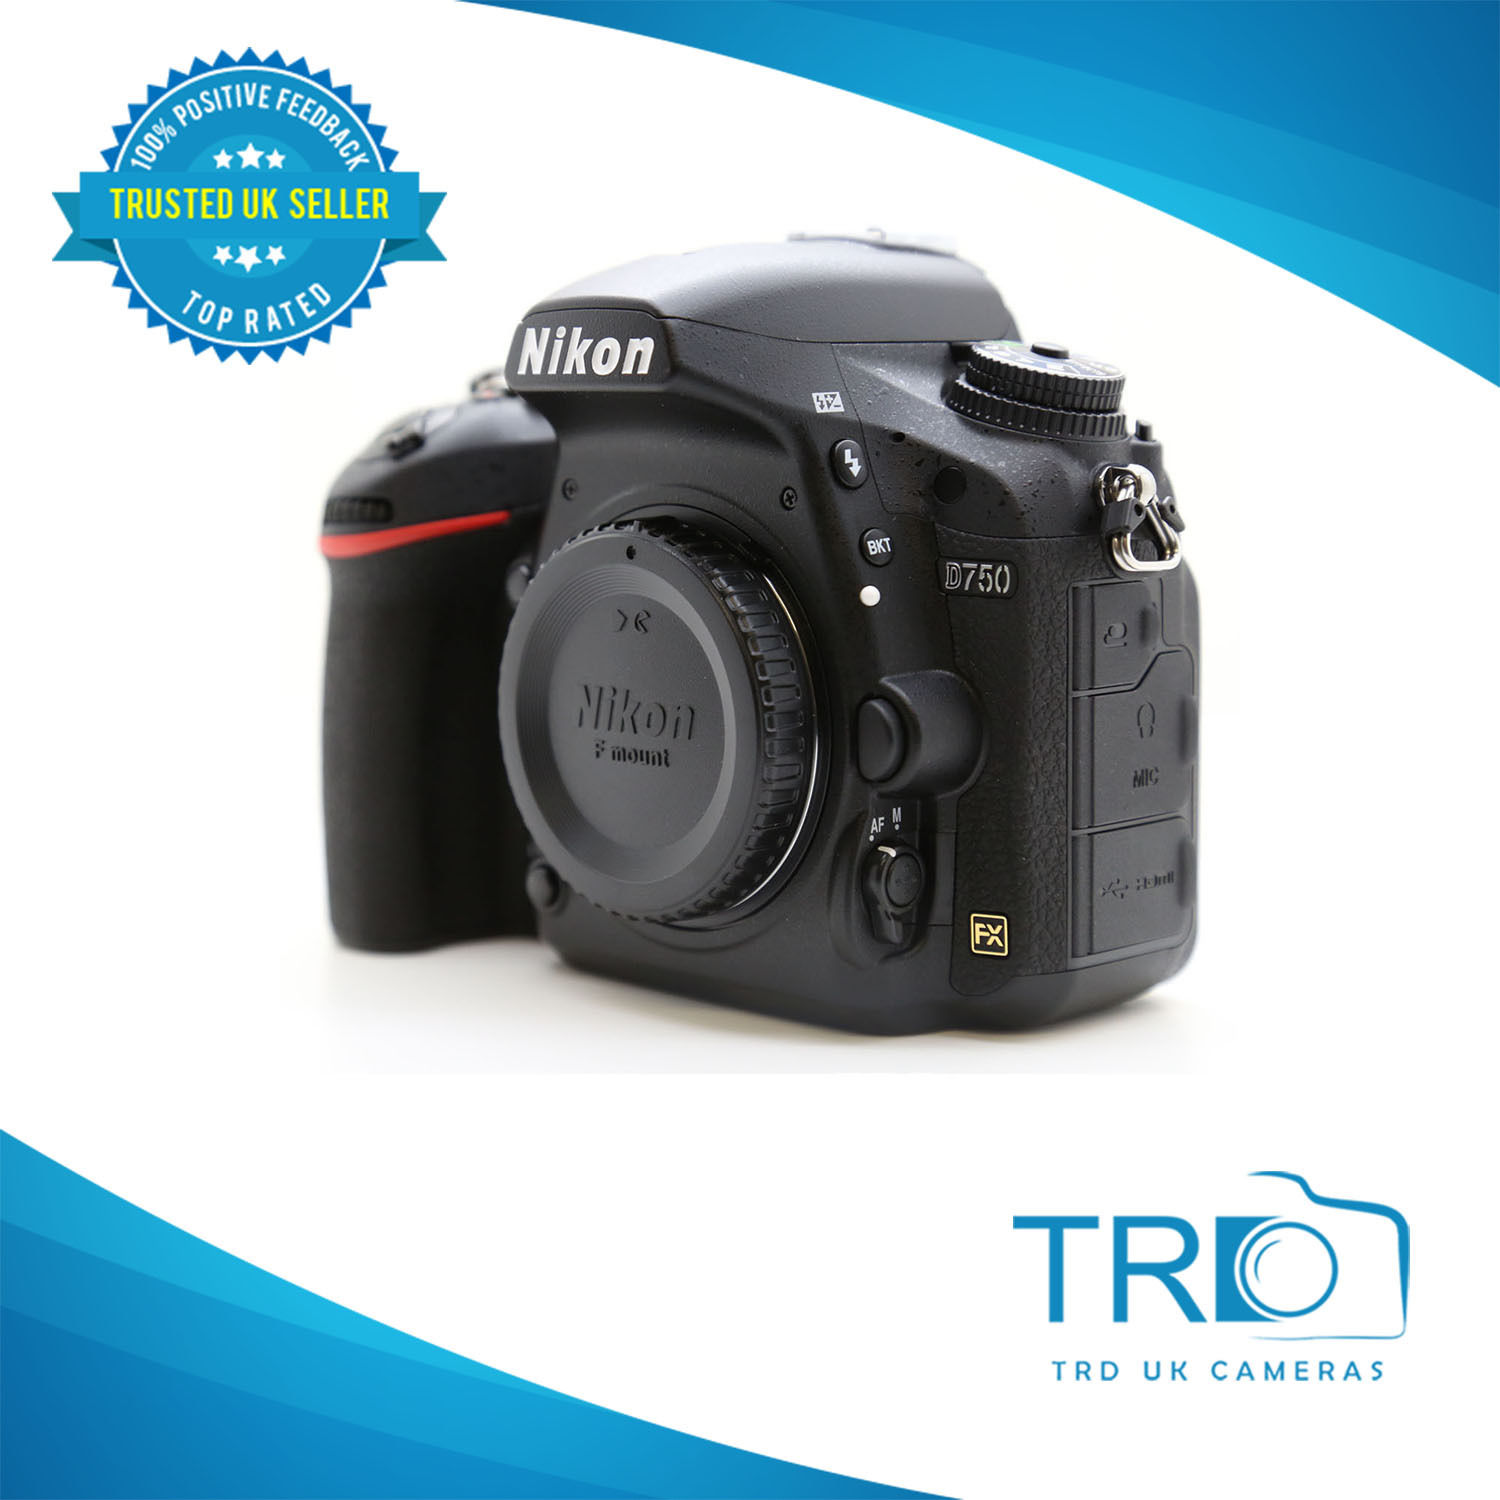 Nikon D750 Digital SLR Camera Body Only with 2 Year Warranty